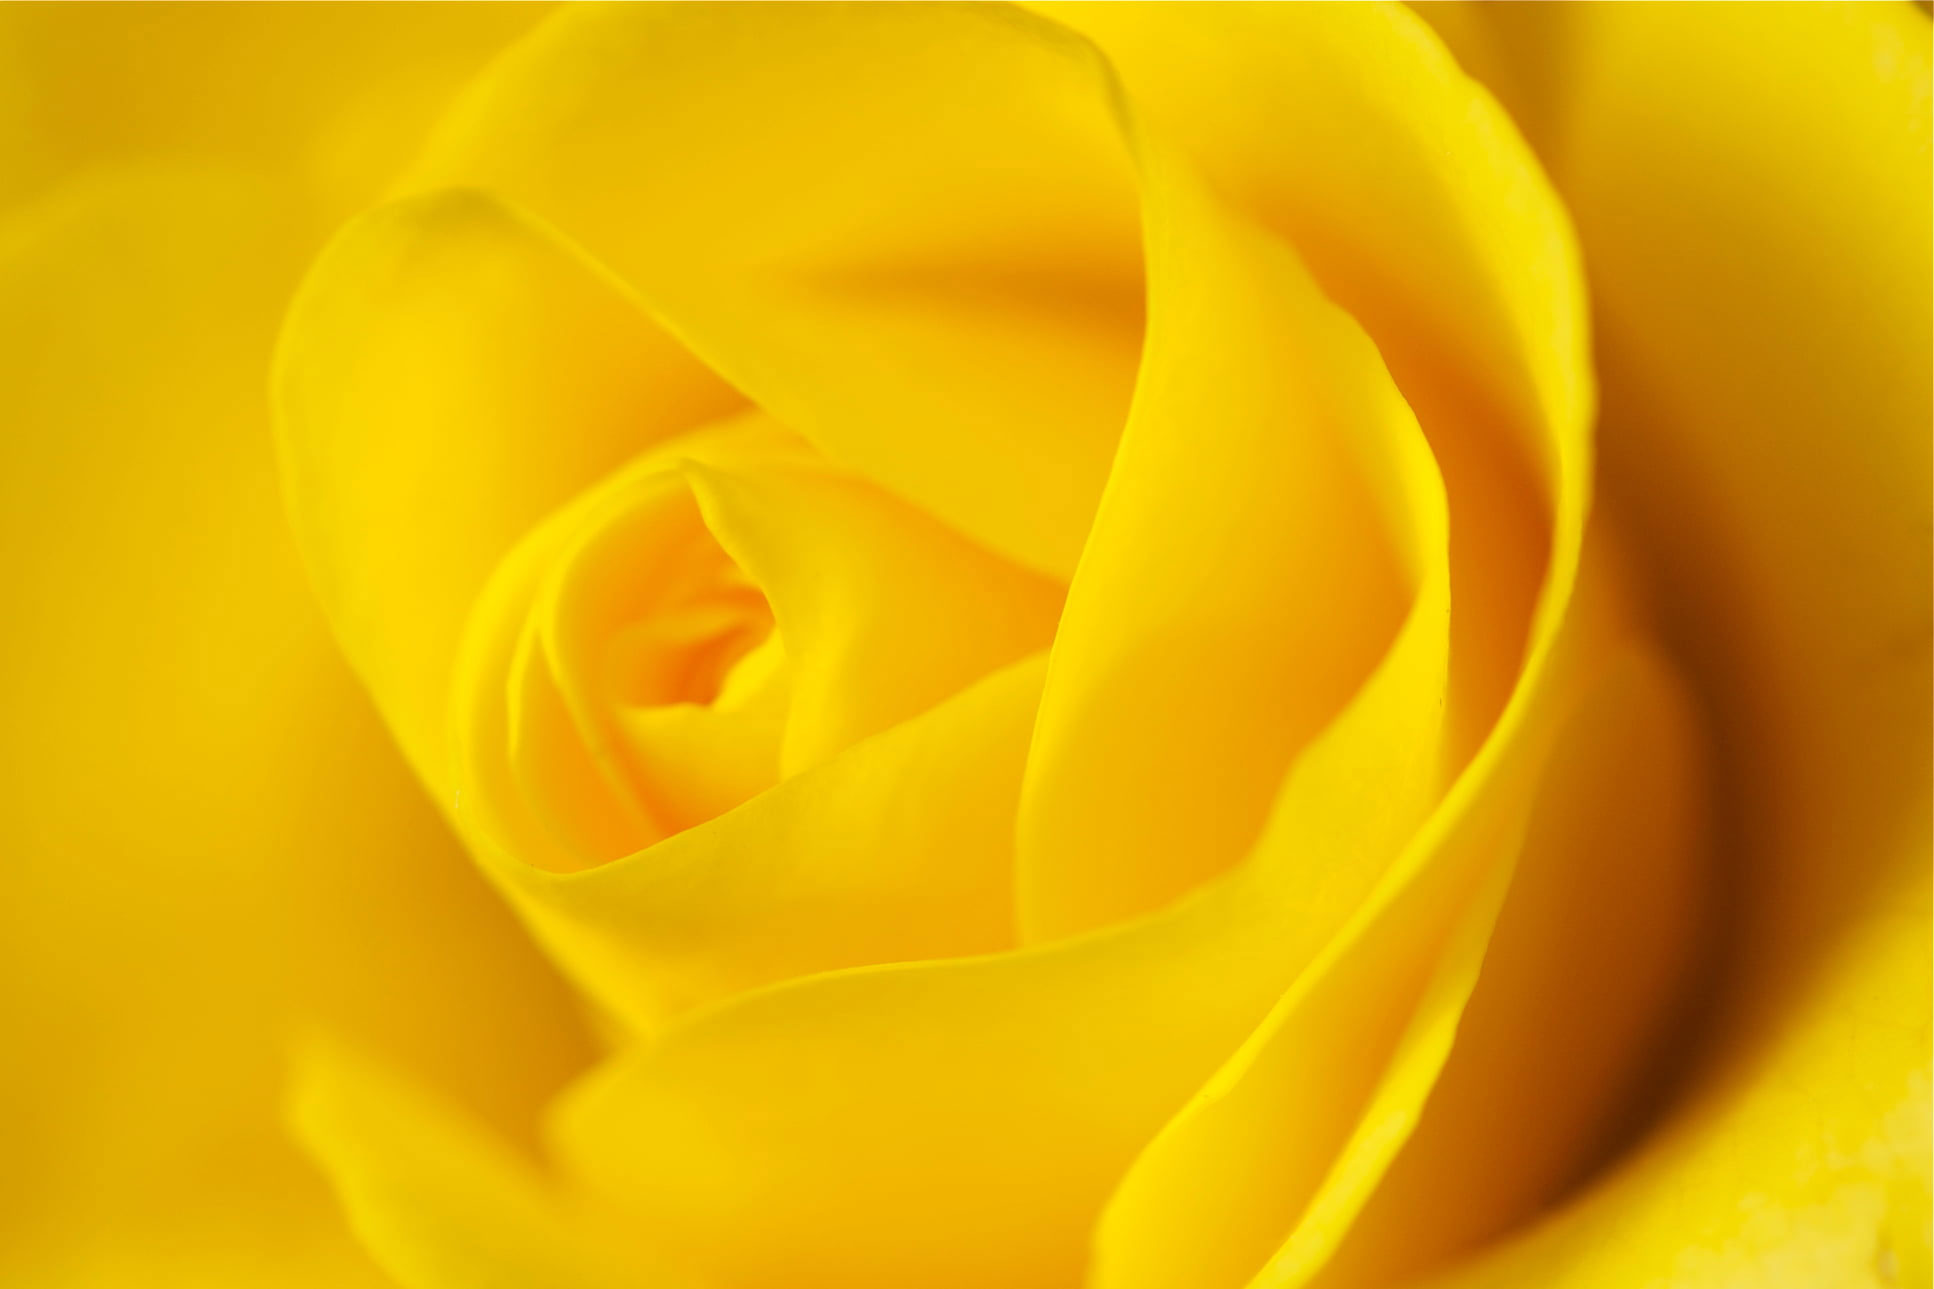 Yellow rose wallpaper, beauty, nature, nikon d90, petal, flower, close-up